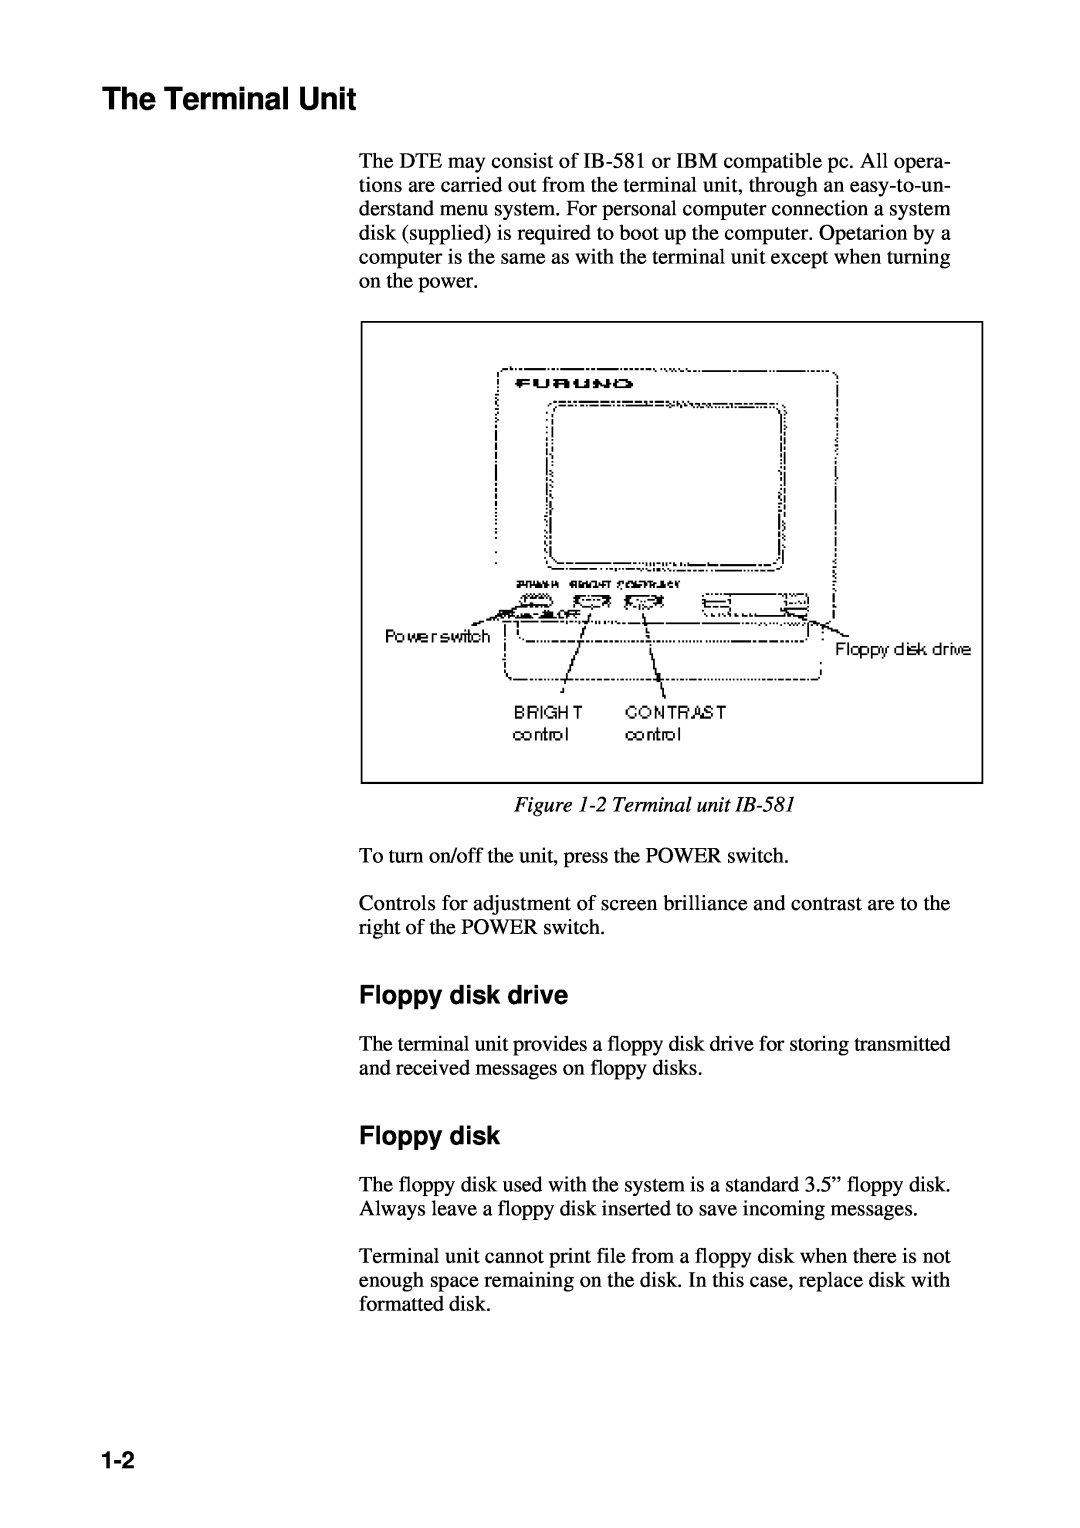 Furuno RC-1500-1T manual The Terminal Unit, Floppy disk drive, 2 Terminal unit IB-581 